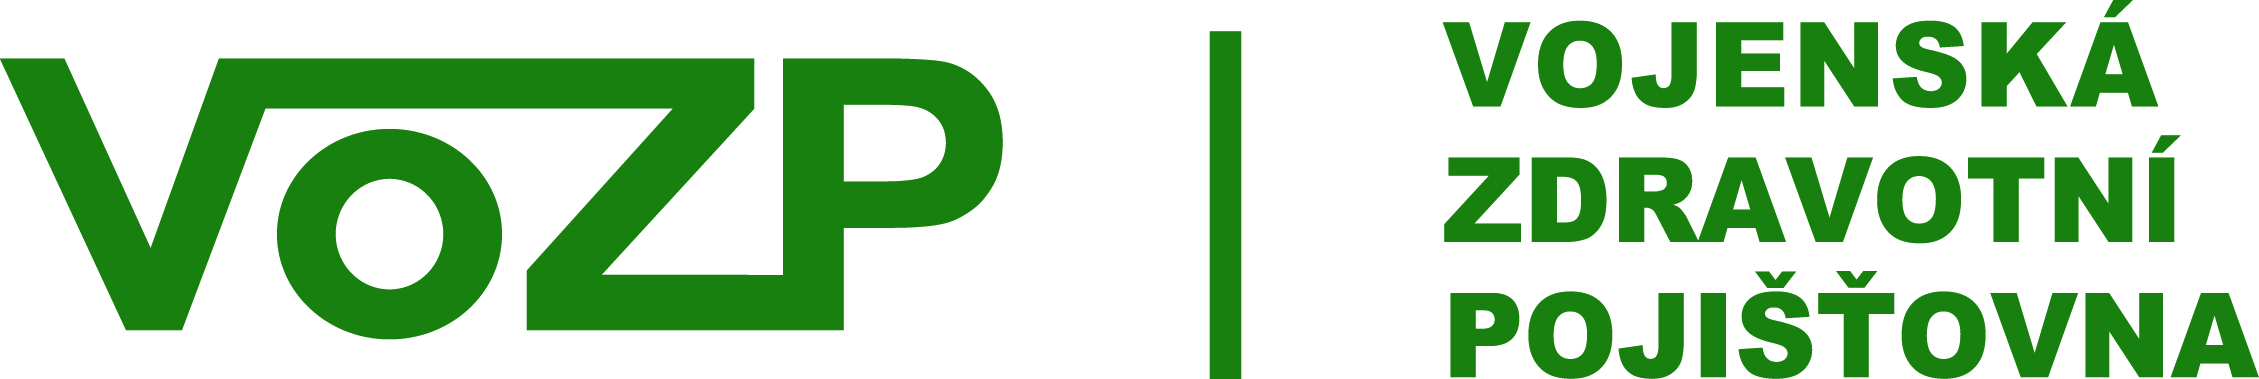 VoZP_logo4_krivky